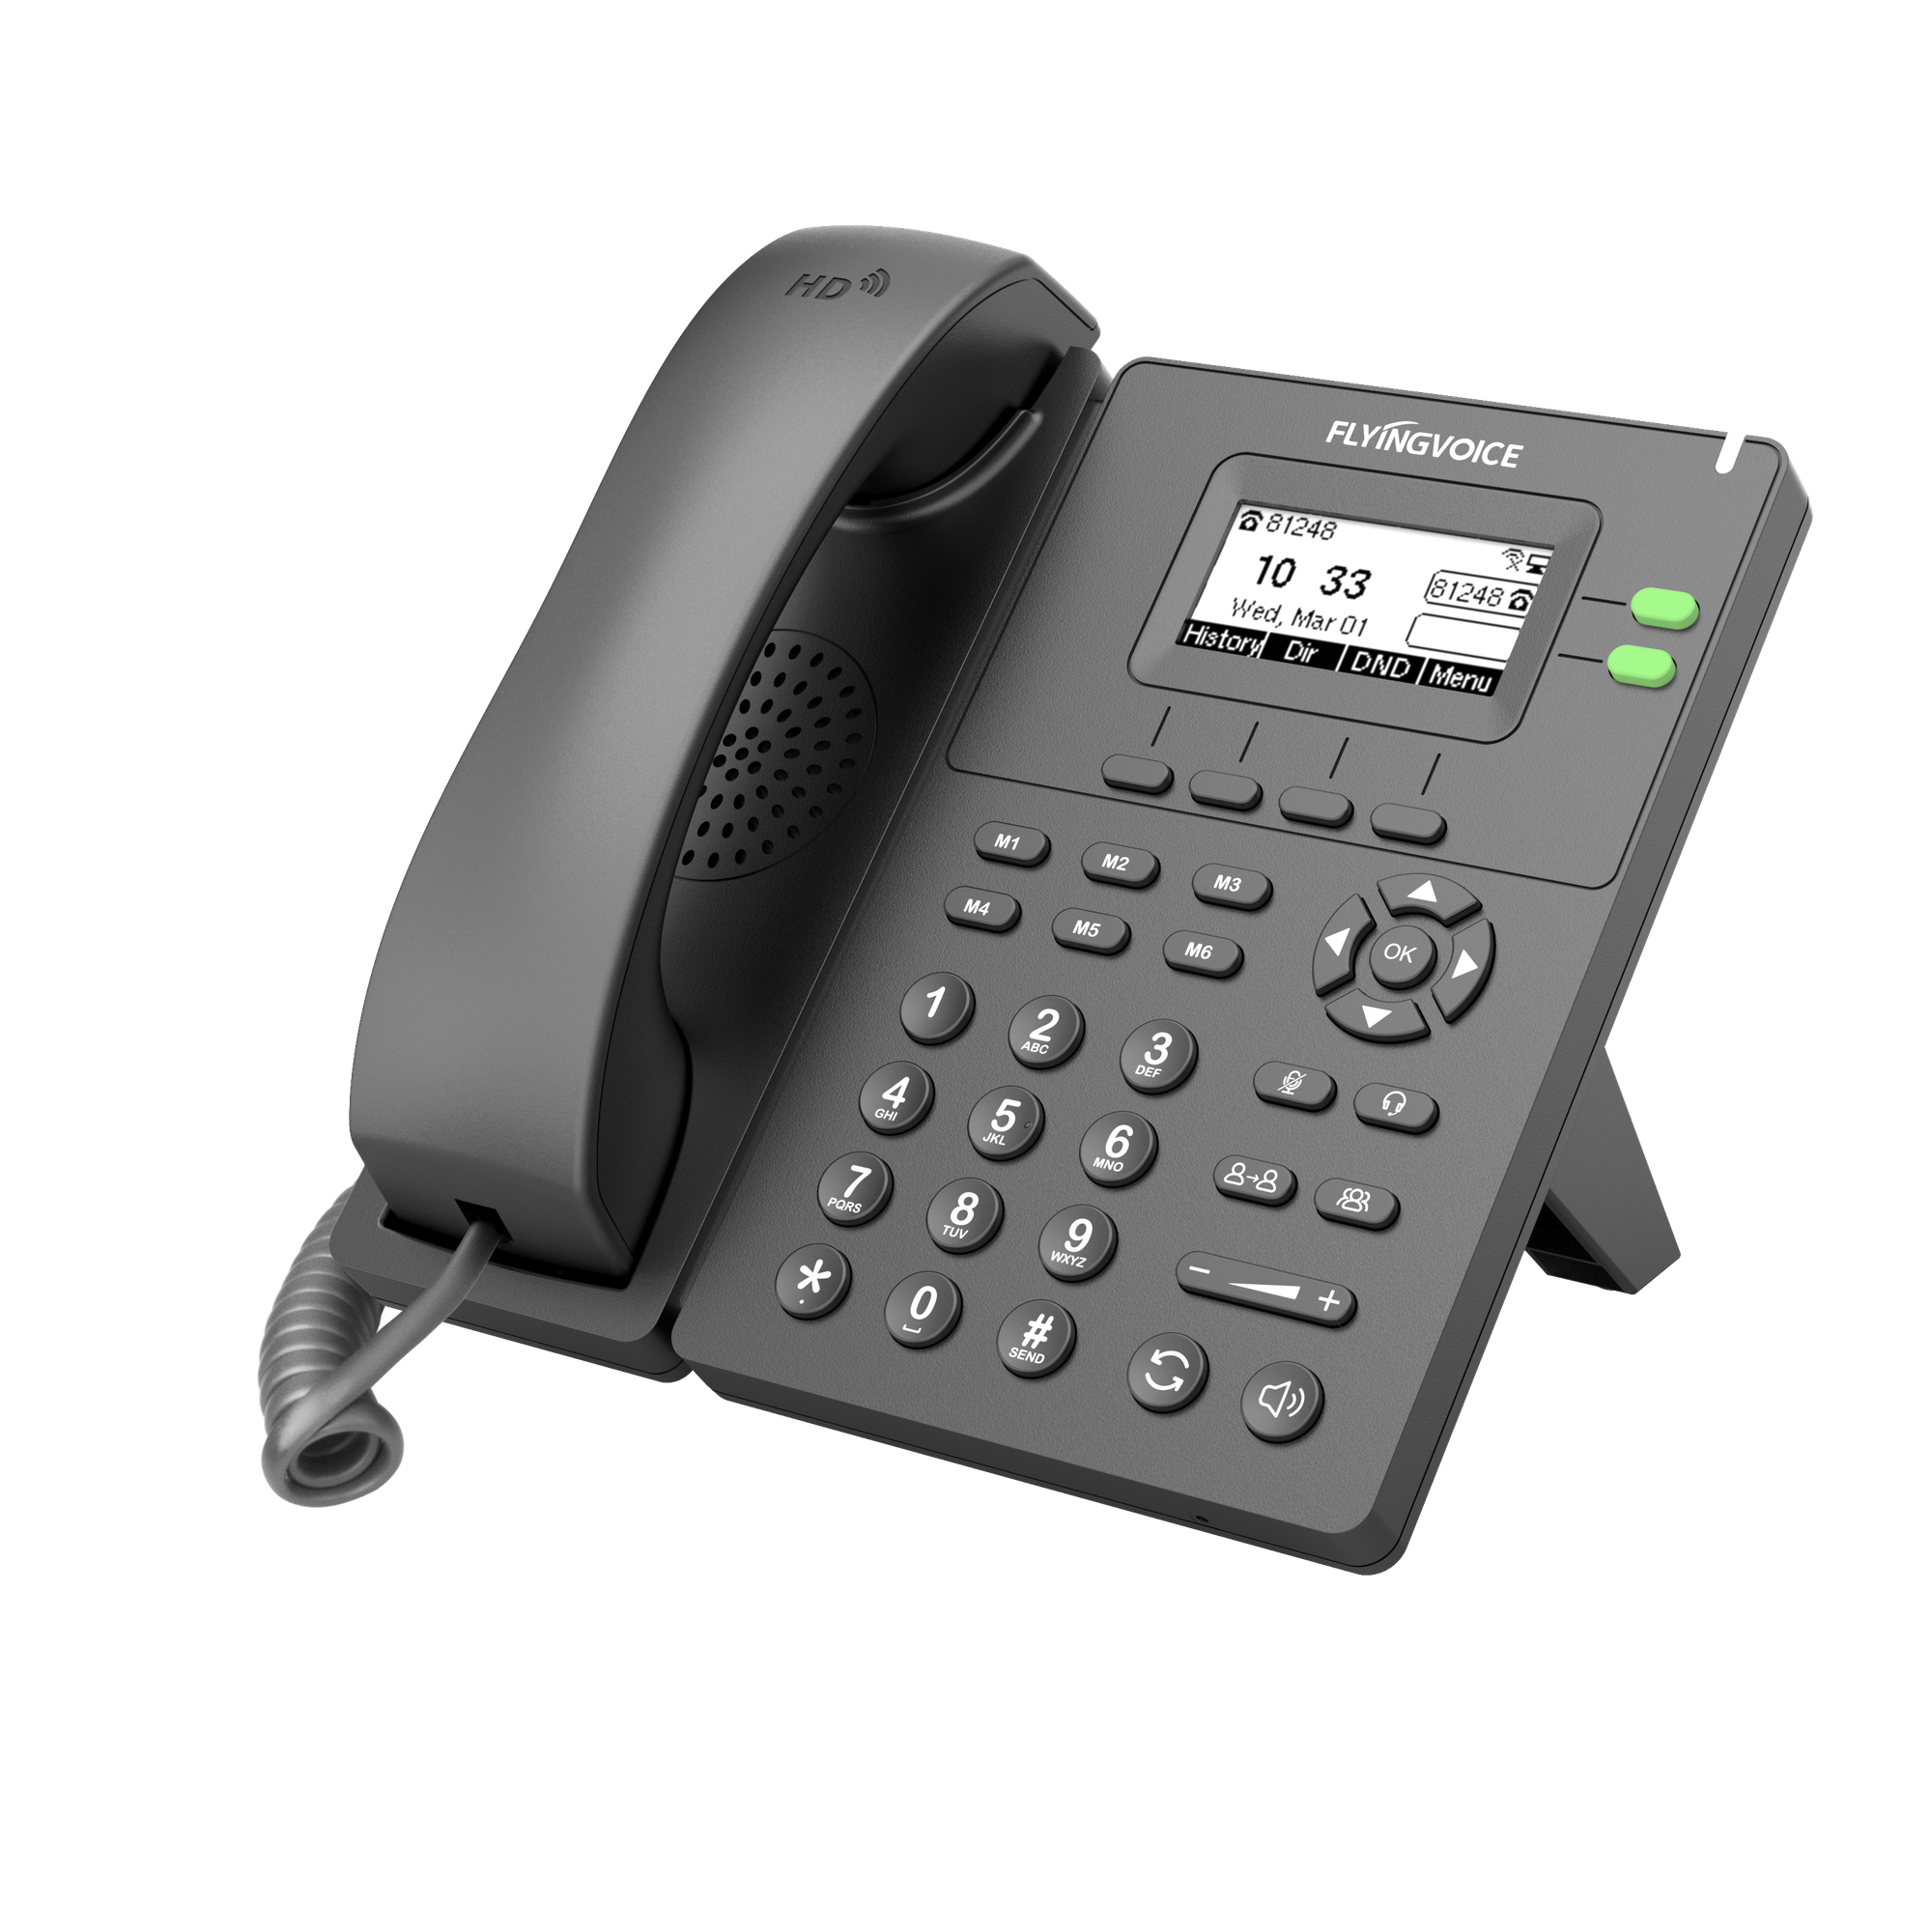 IP-телефон FLYINGVOICE P20 2 SIP аккаунта монохромный дисплей 23 дюйма 132 x 64 с подсветкой конференция на 6 абонентов (RJ9)/DECT USB и Wi-Fi